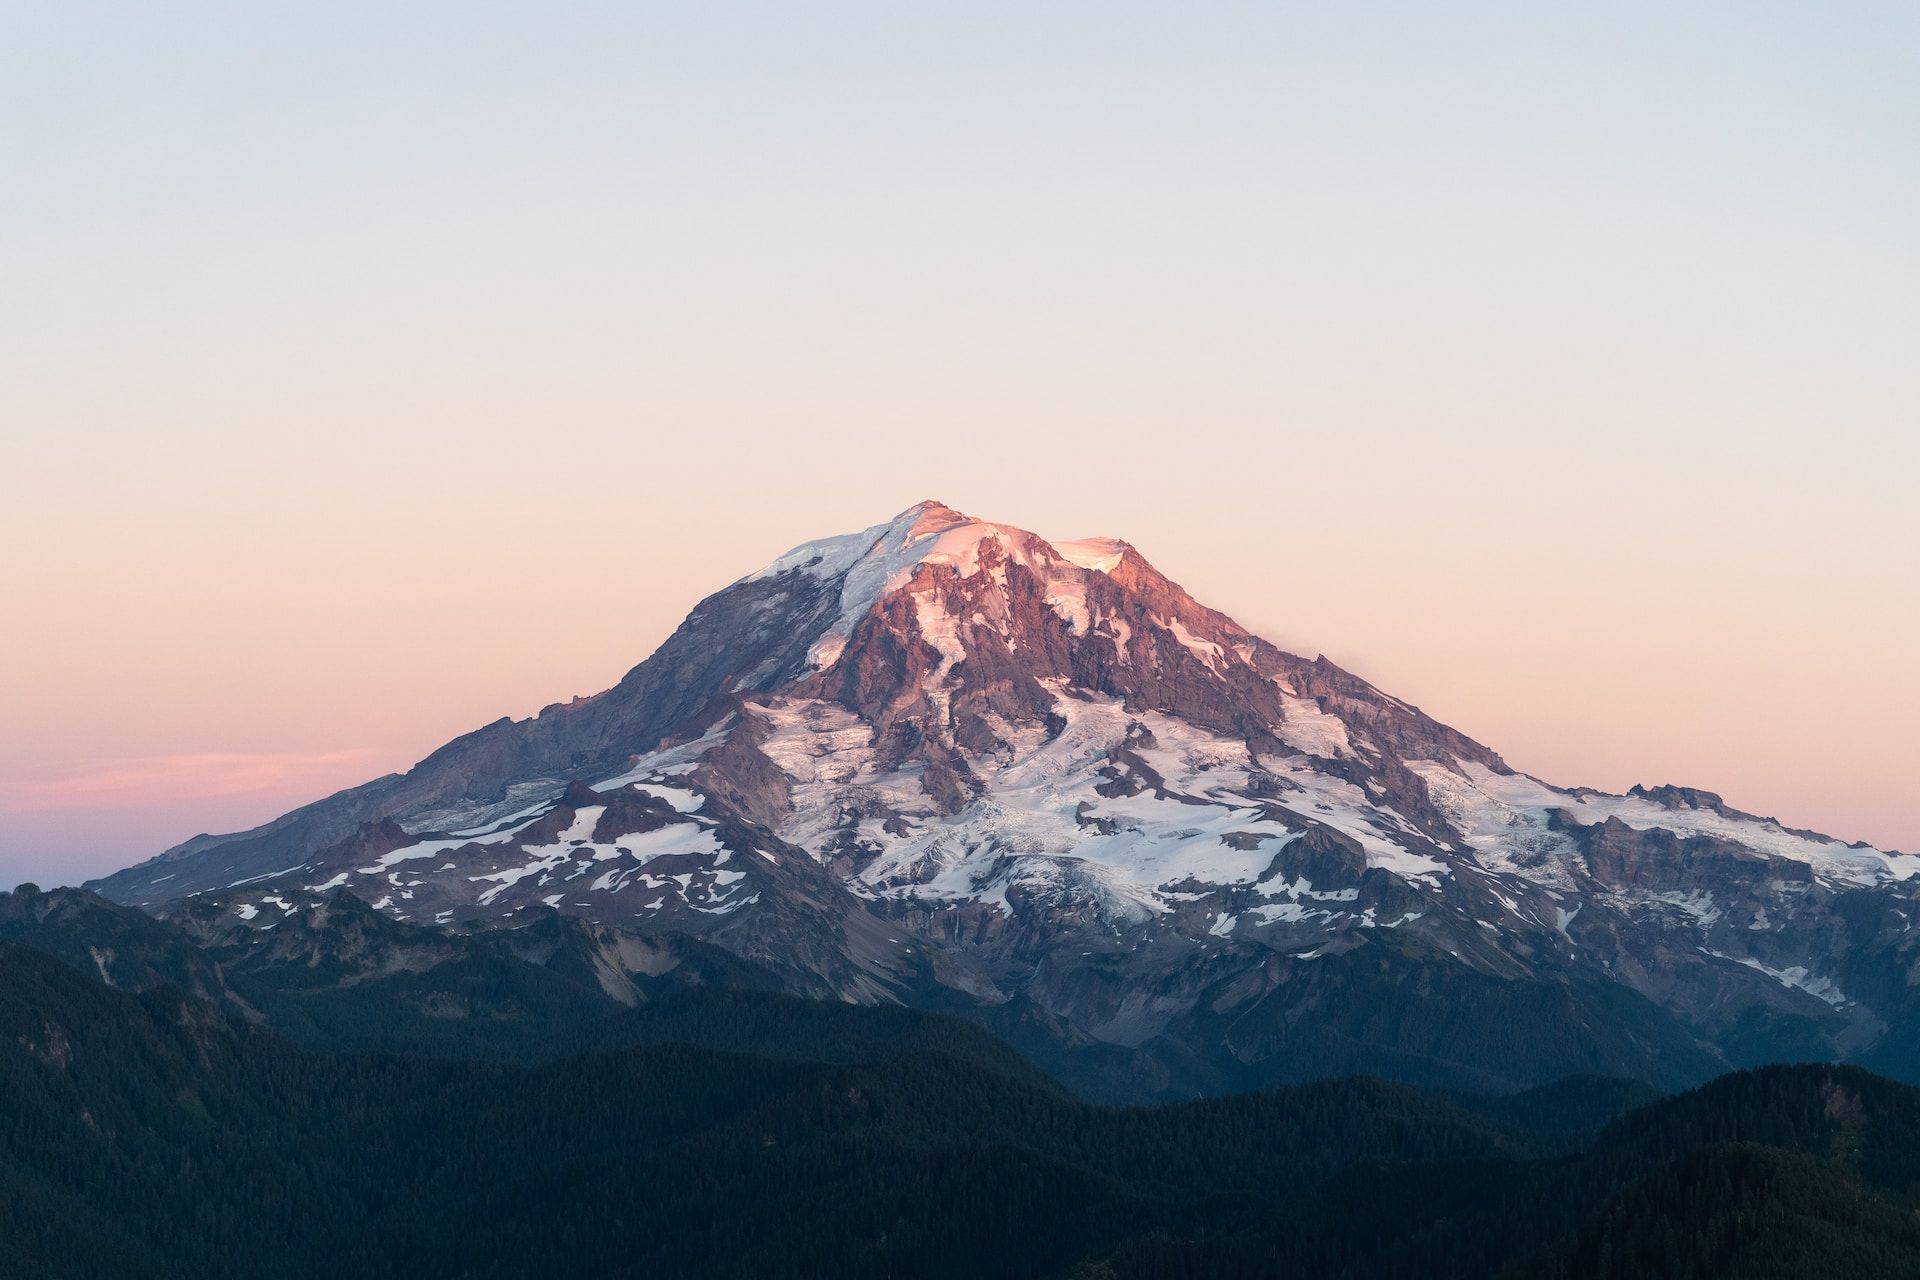 A distant view of Mount Rainier peak